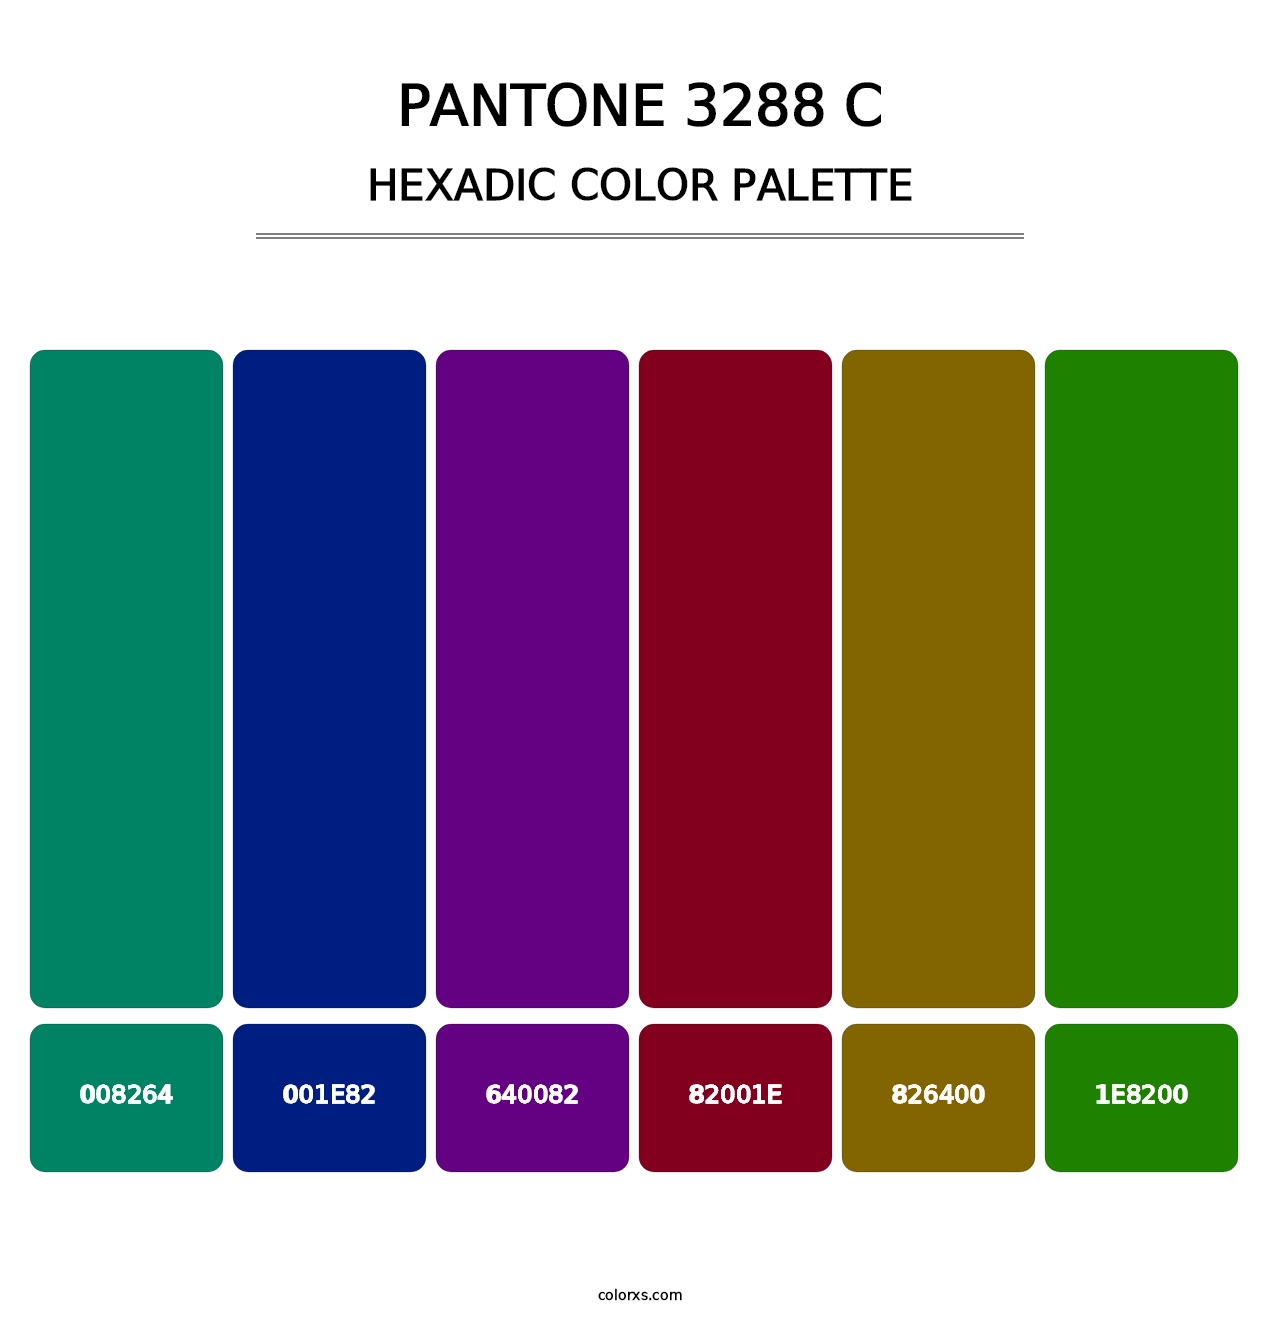 PANTONE 3288 C - Hexadic Color Palette